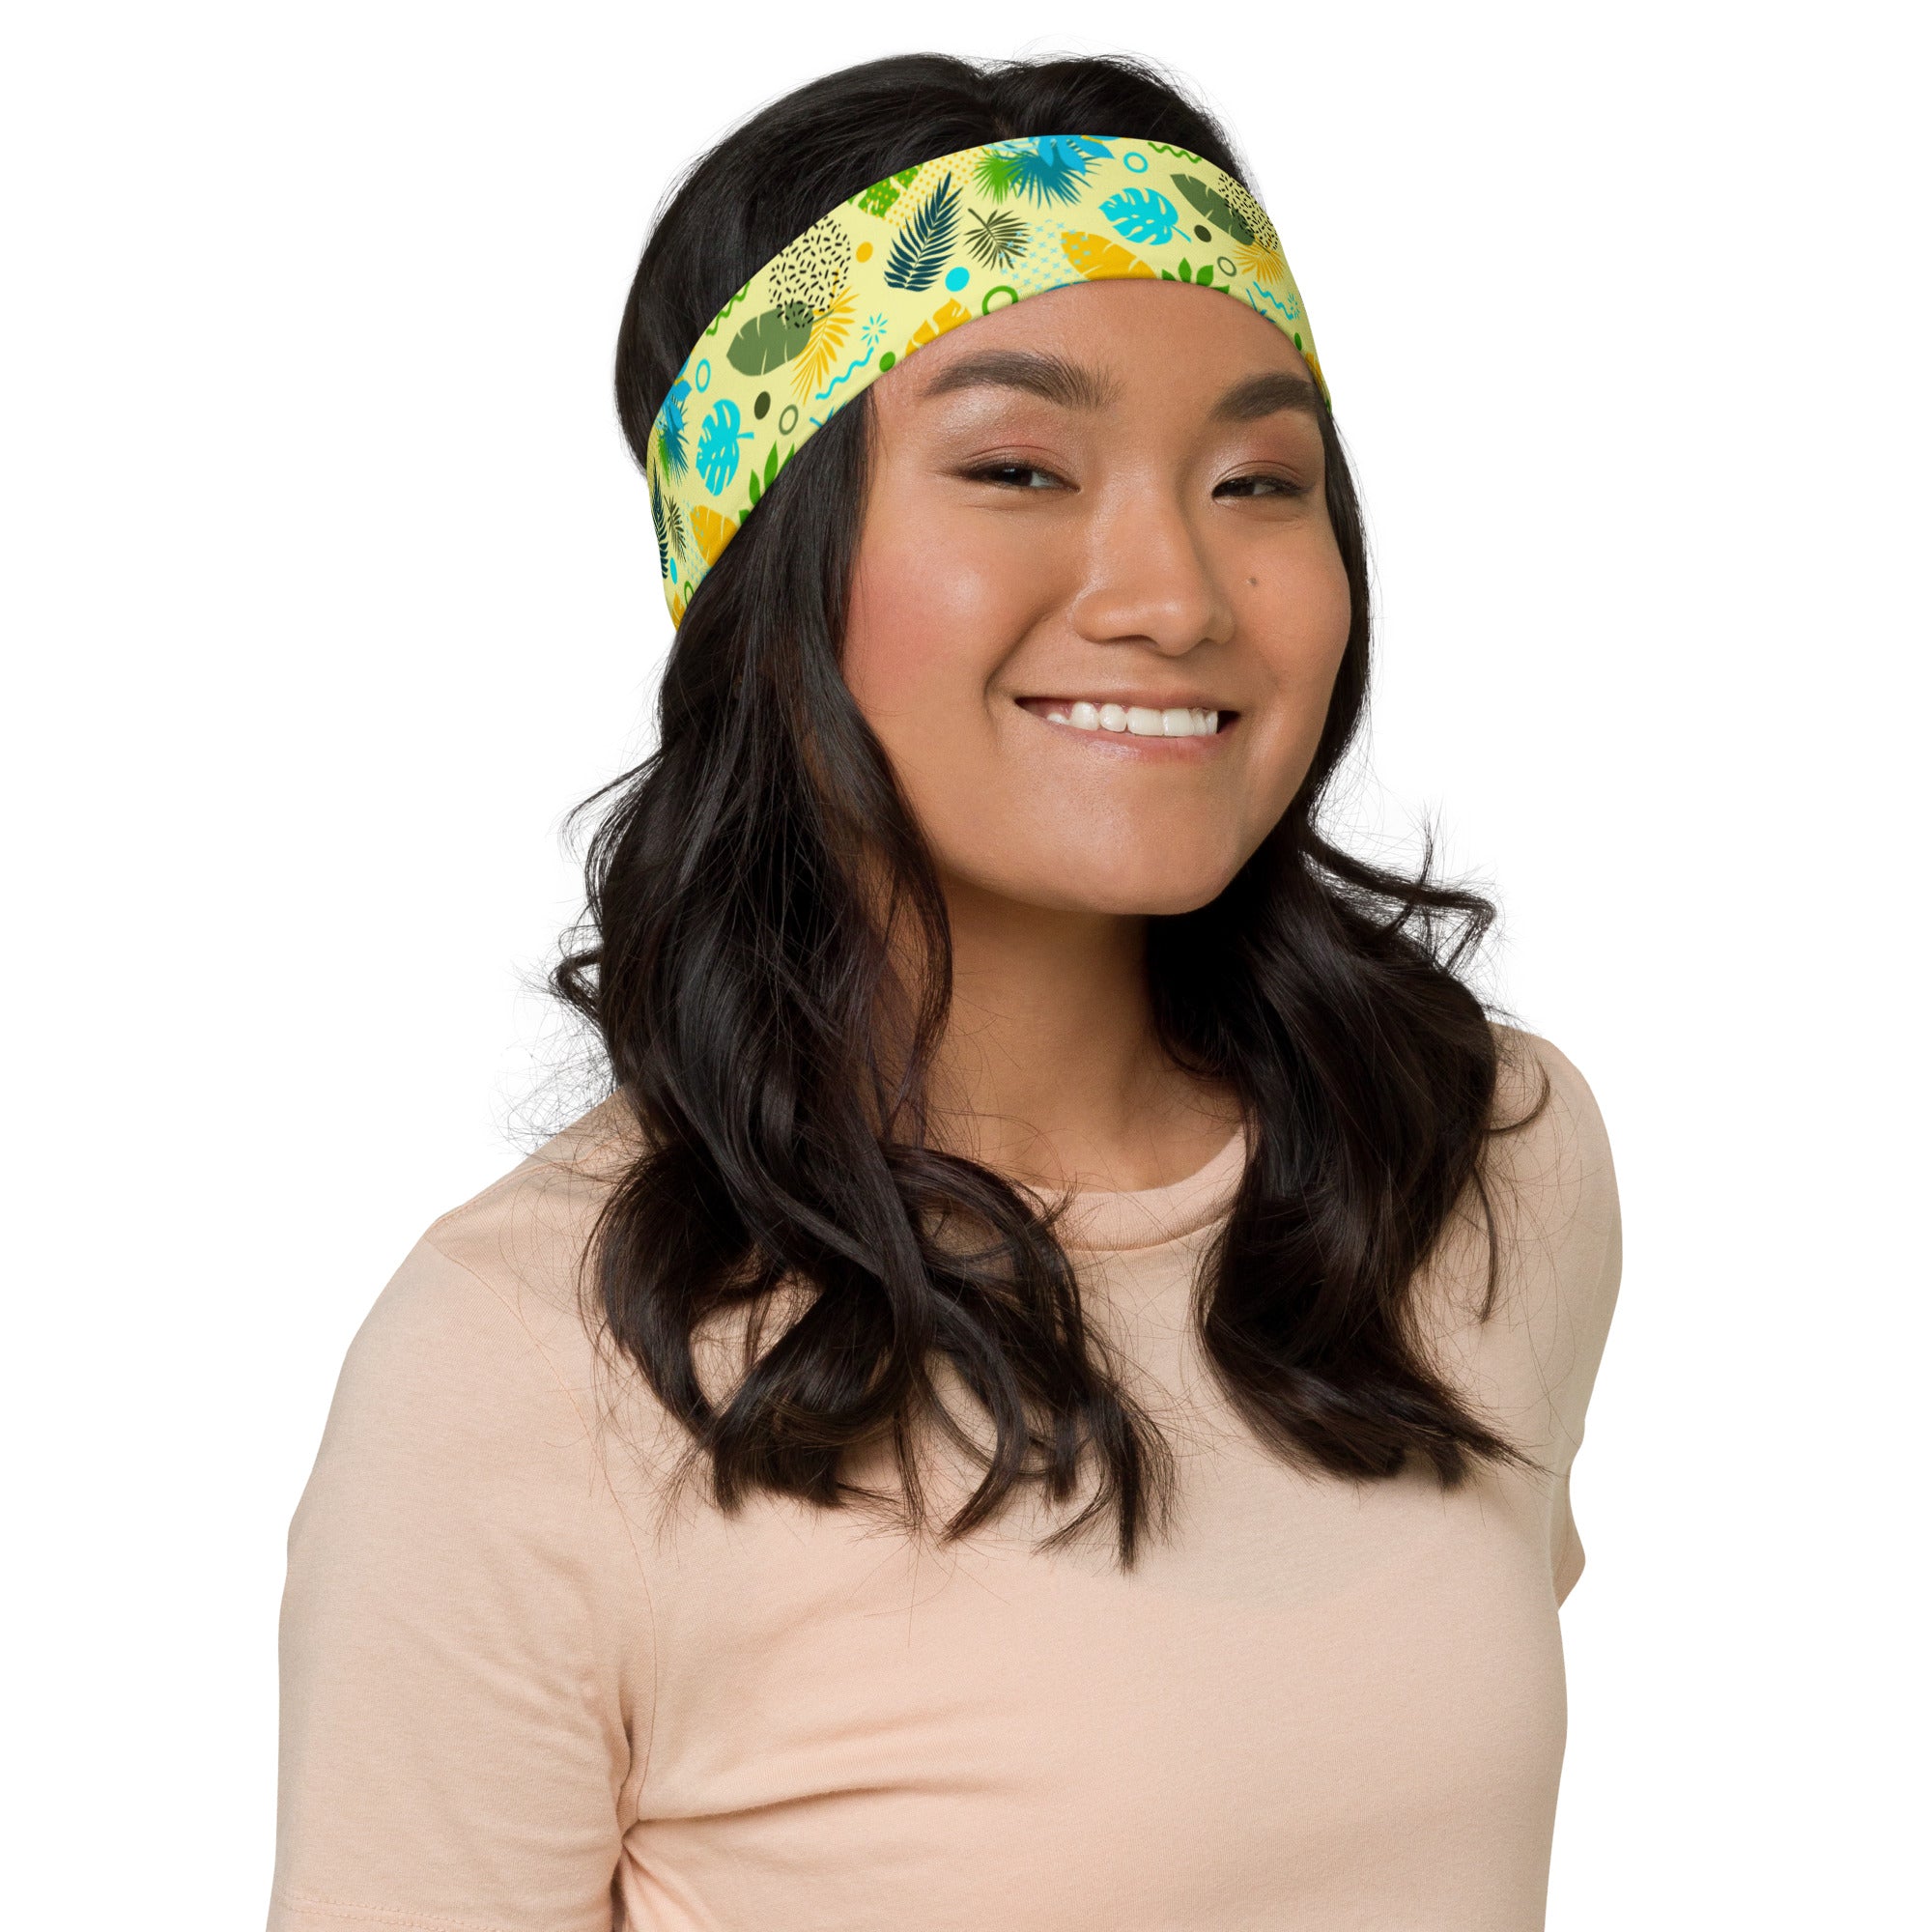 Women's Printed Headband - Tropical Print in Lemon & Lime